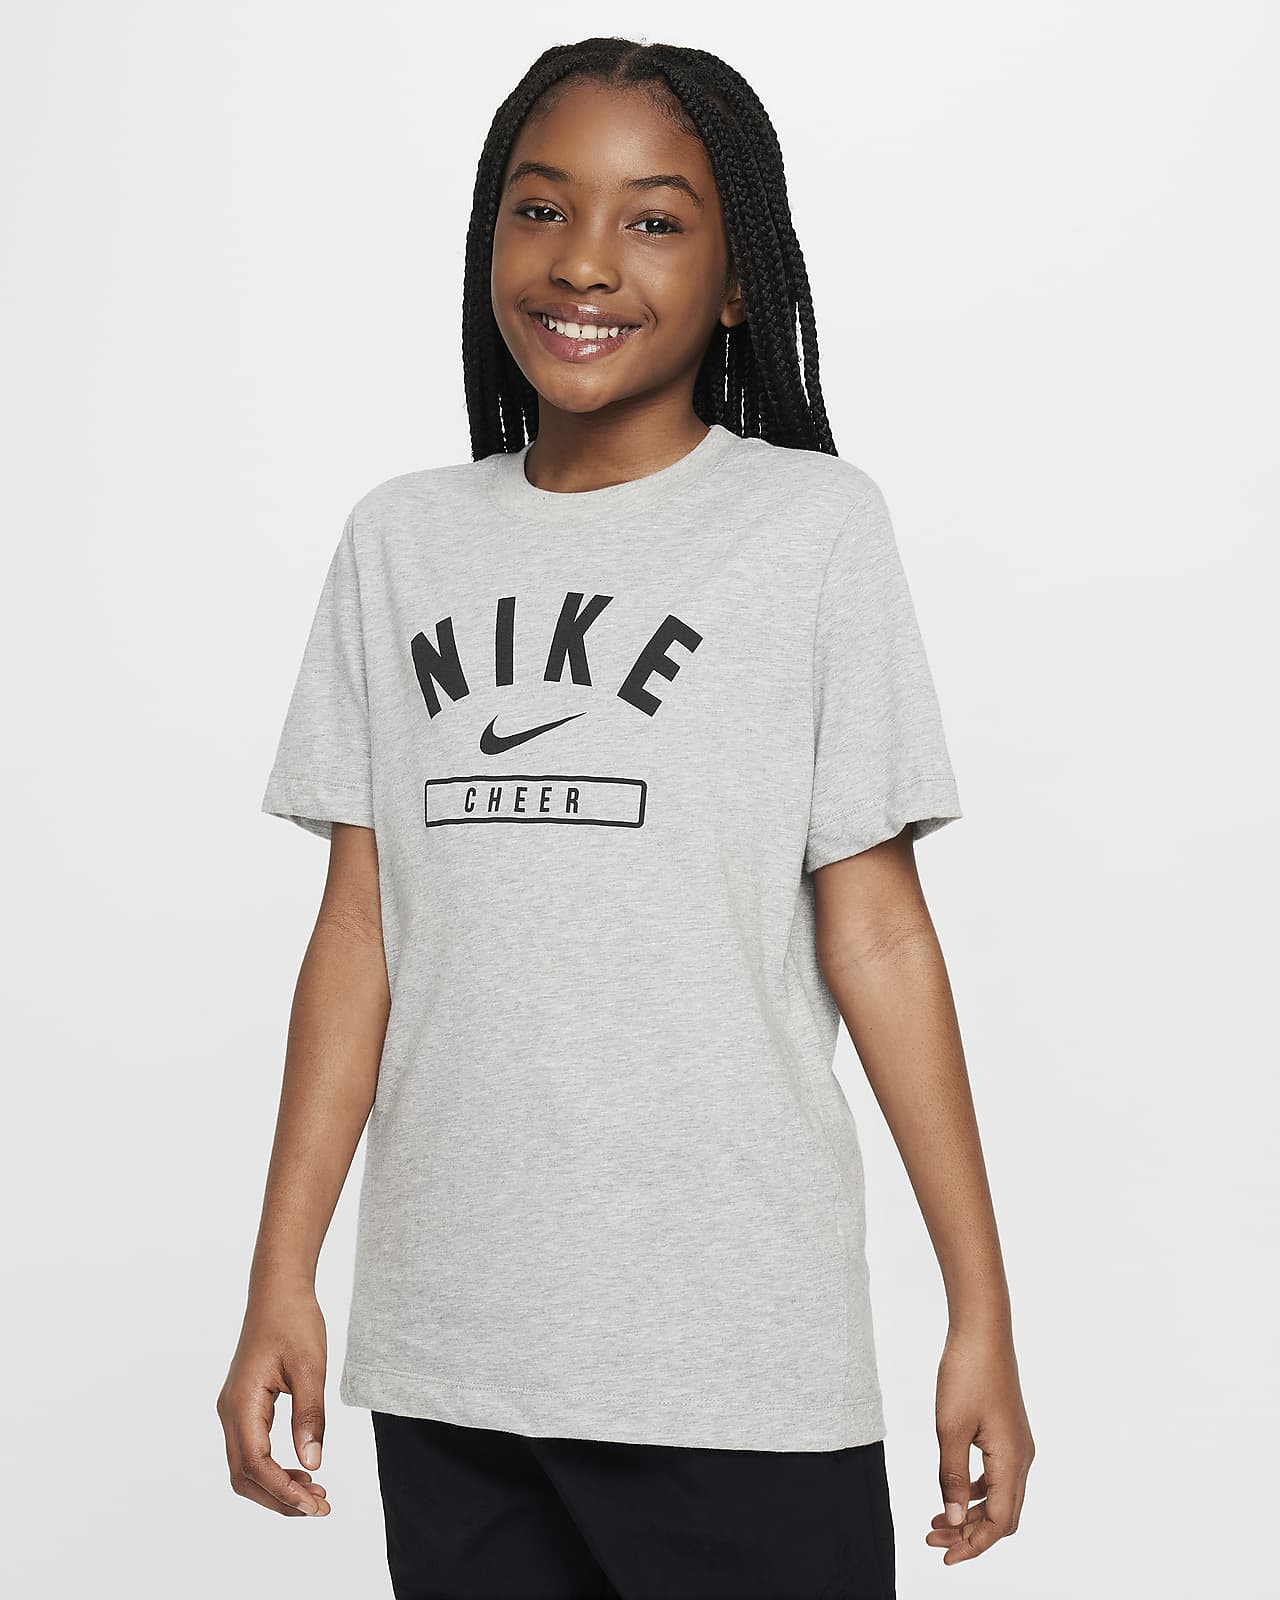 Nike Big Kids' (Girls') Cheer T-Shirt